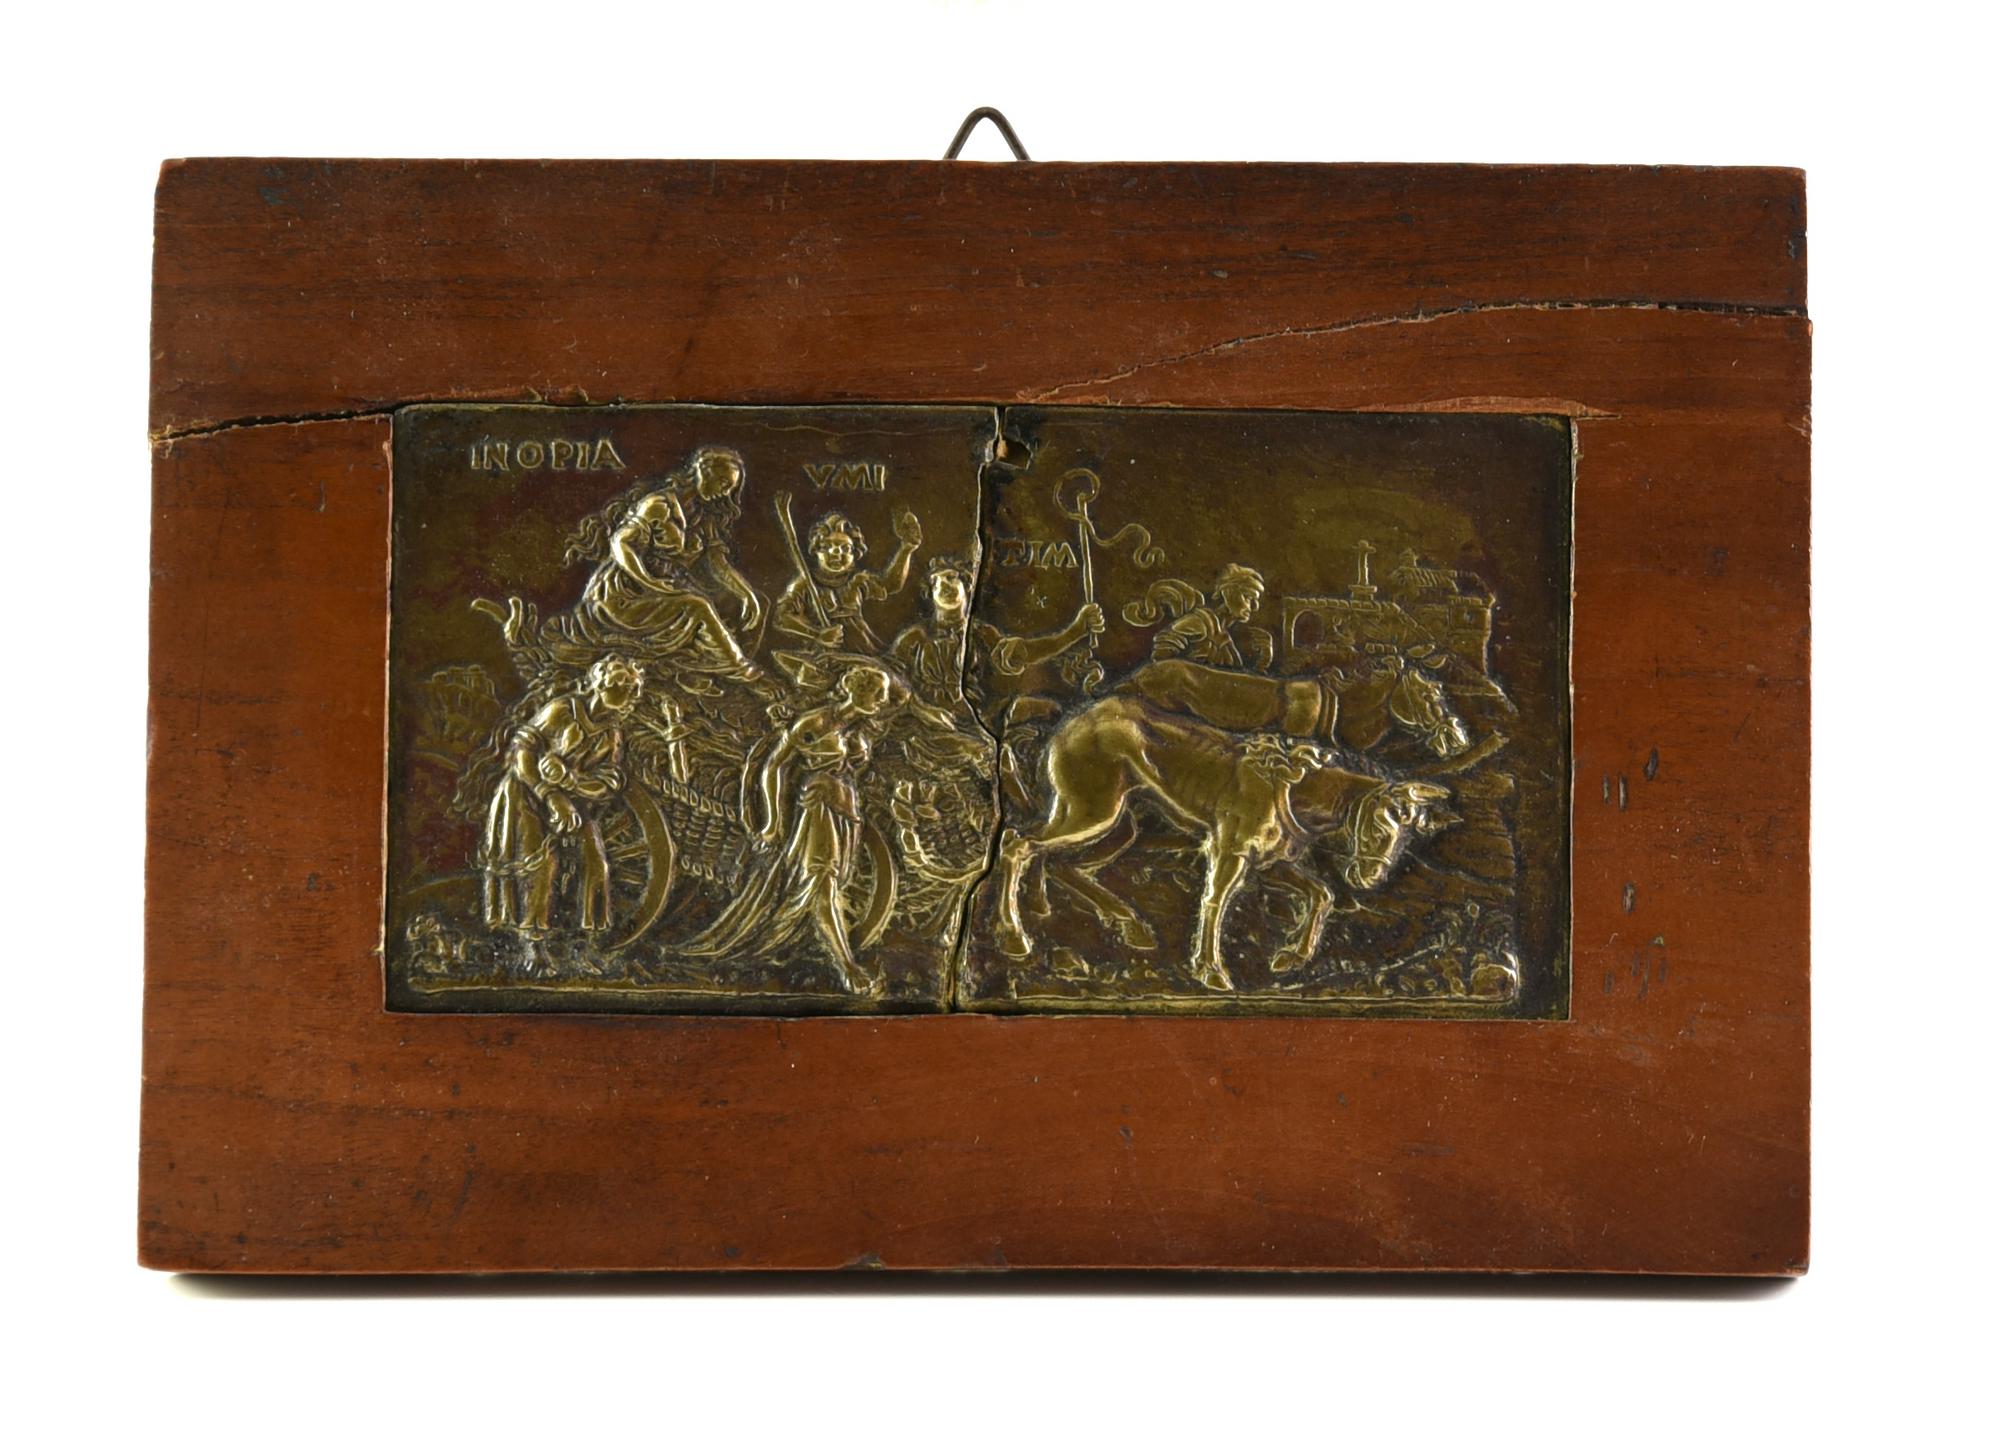 IN OPIA VMI TIM bassorilievo in bronzo entro cornice in legno, cm 6,1x12,5...